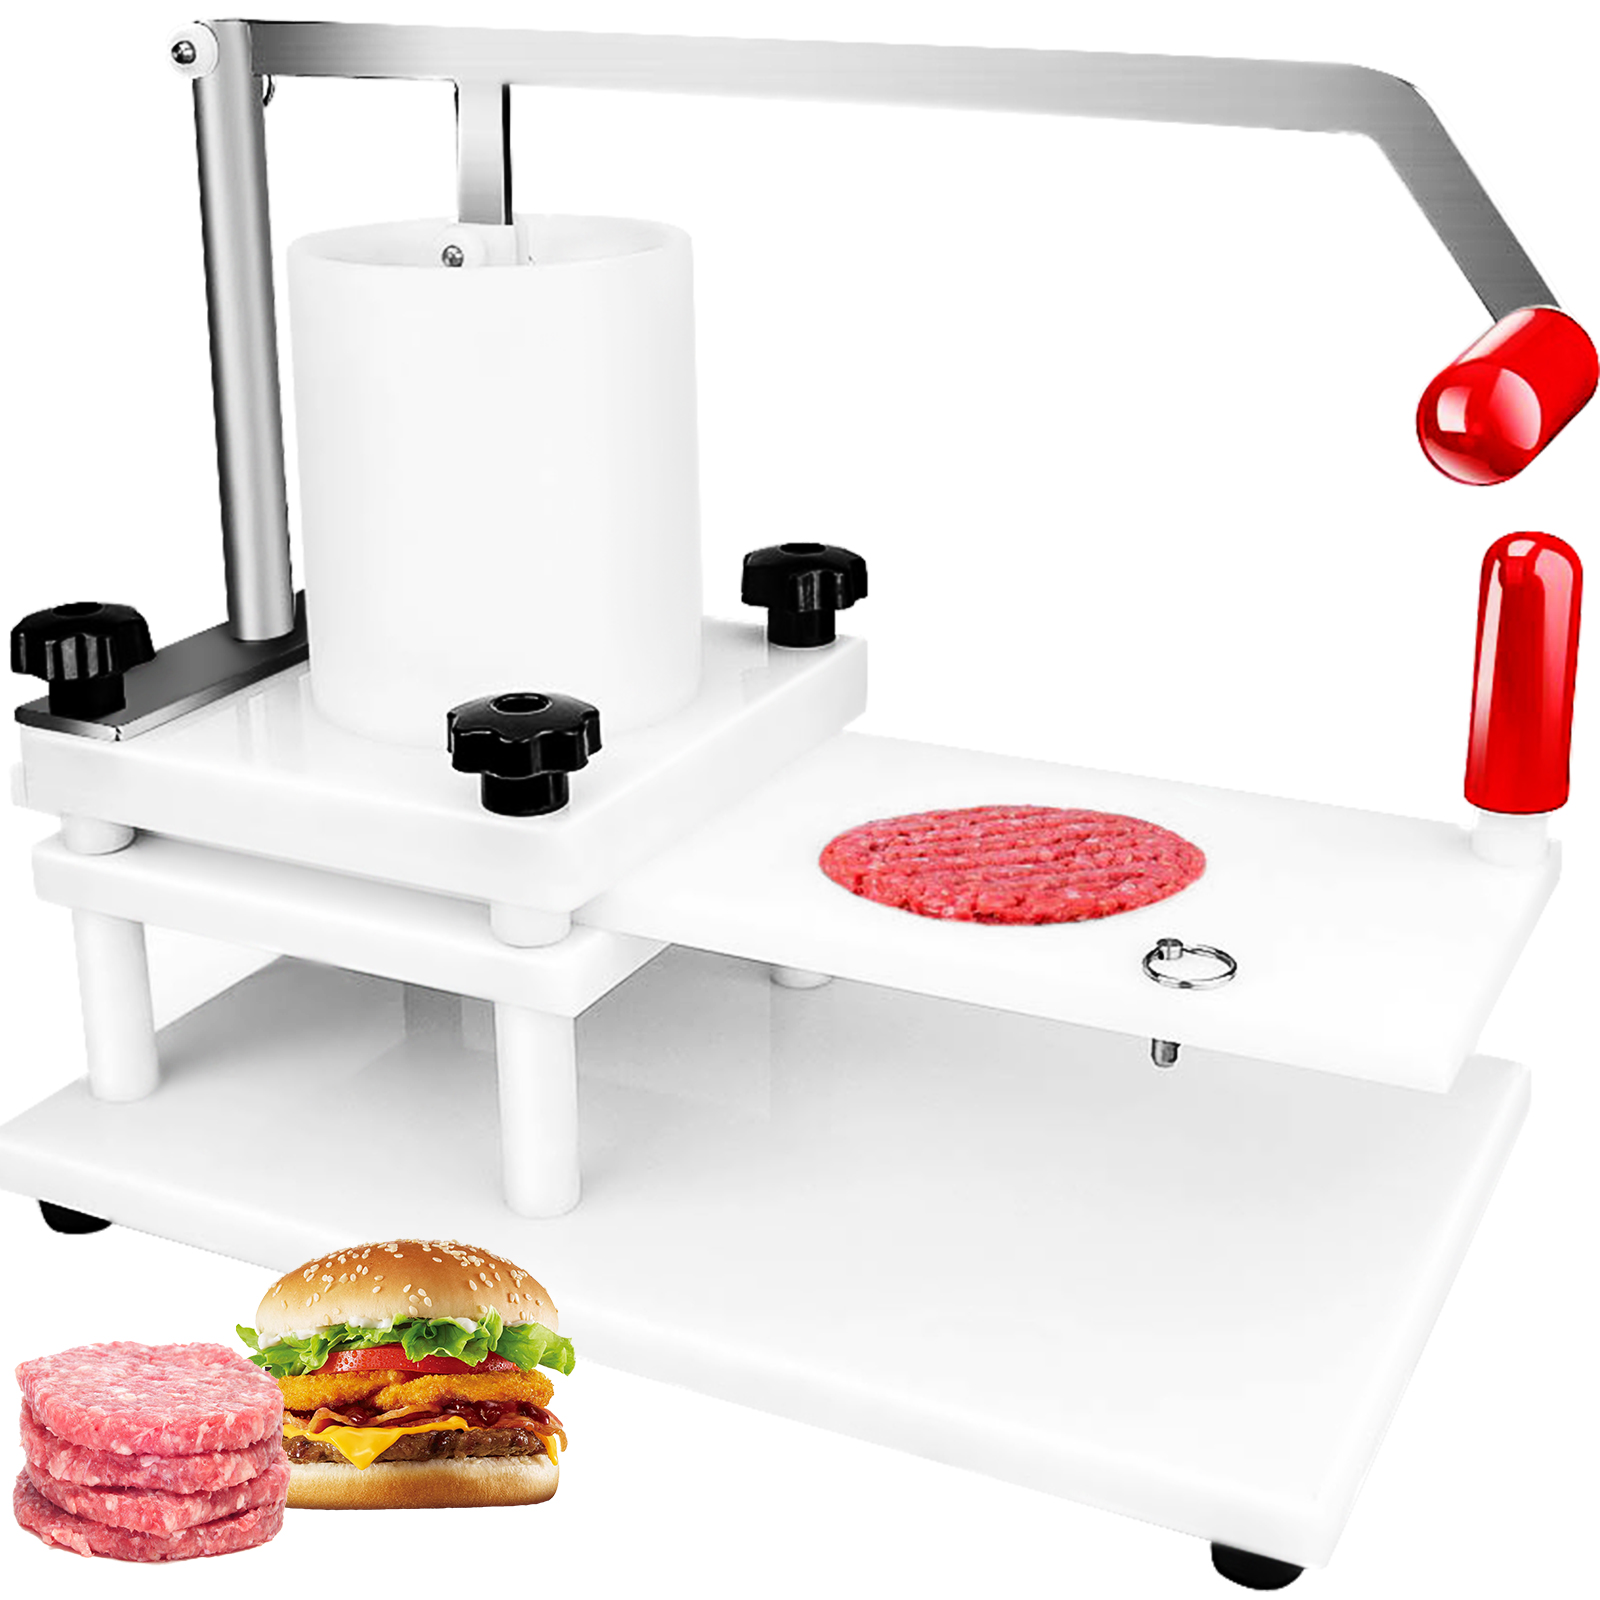 Commercial Burger Press Commercial Hamburger Patty Maker 5.1-inch Burger Machine от Vevor Many GEOs